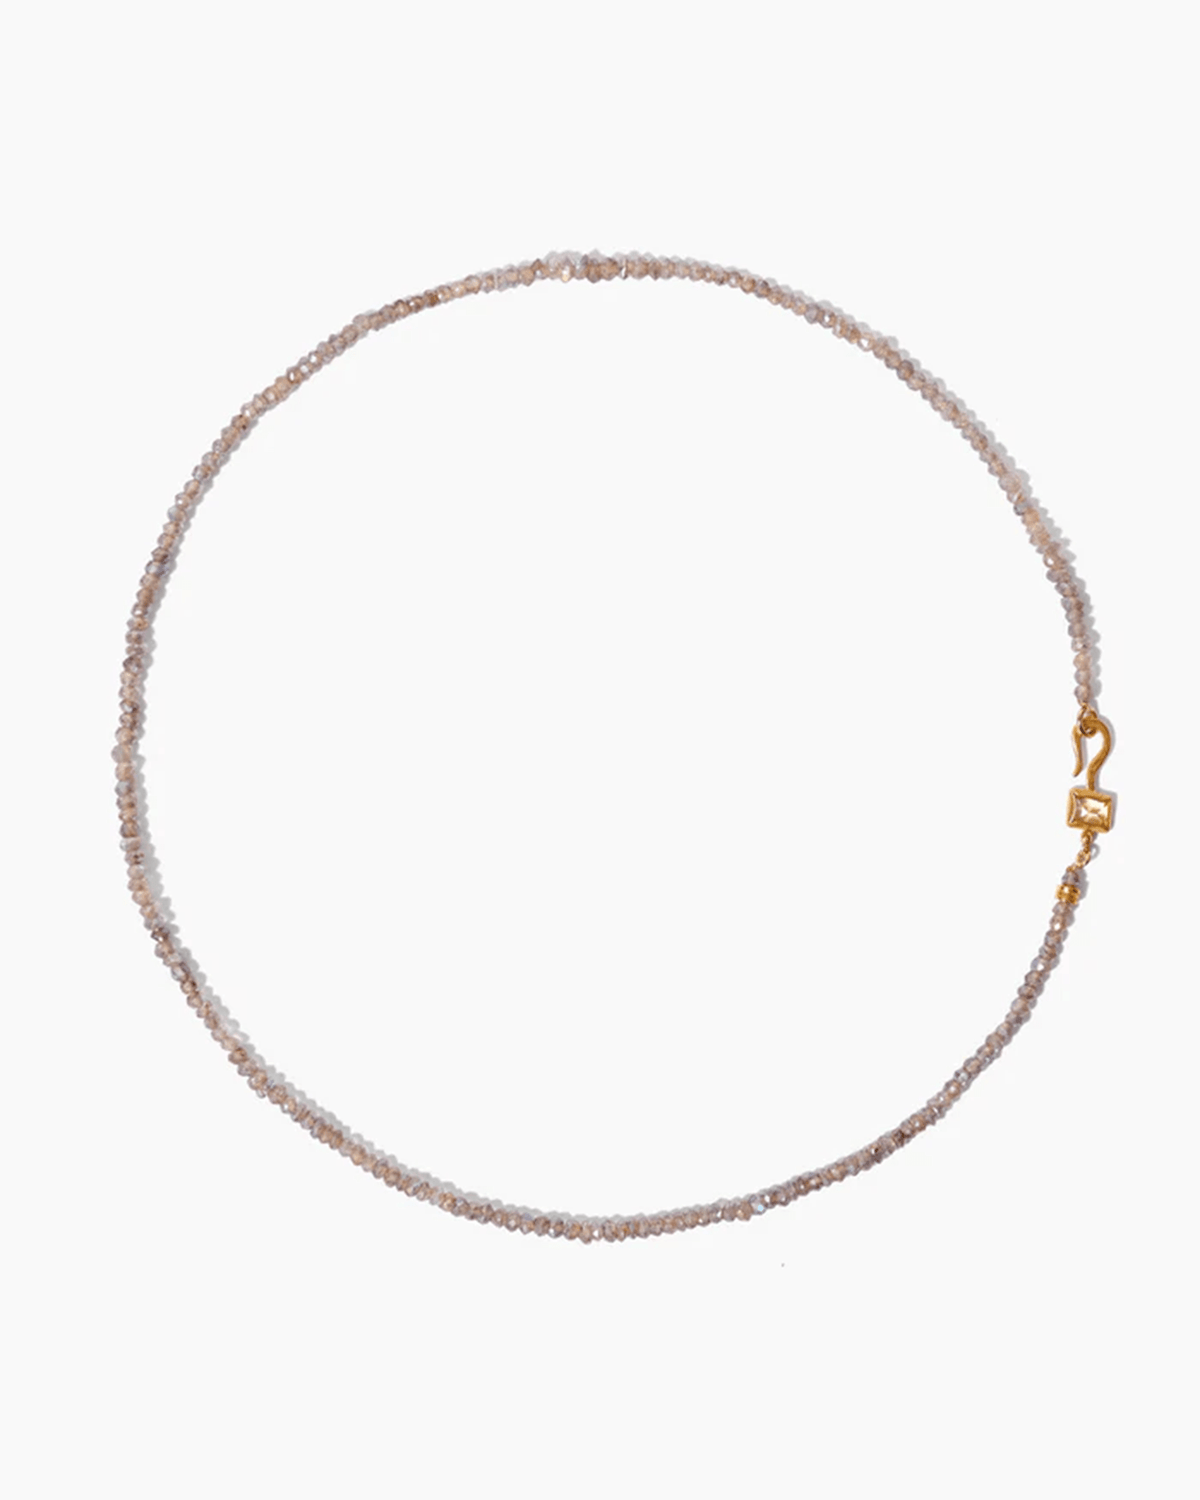 Chan Luu Jewelry Labrodorite Mix/Gold Petite Odyseey Necklace in Labradorite Mix w/ Gold